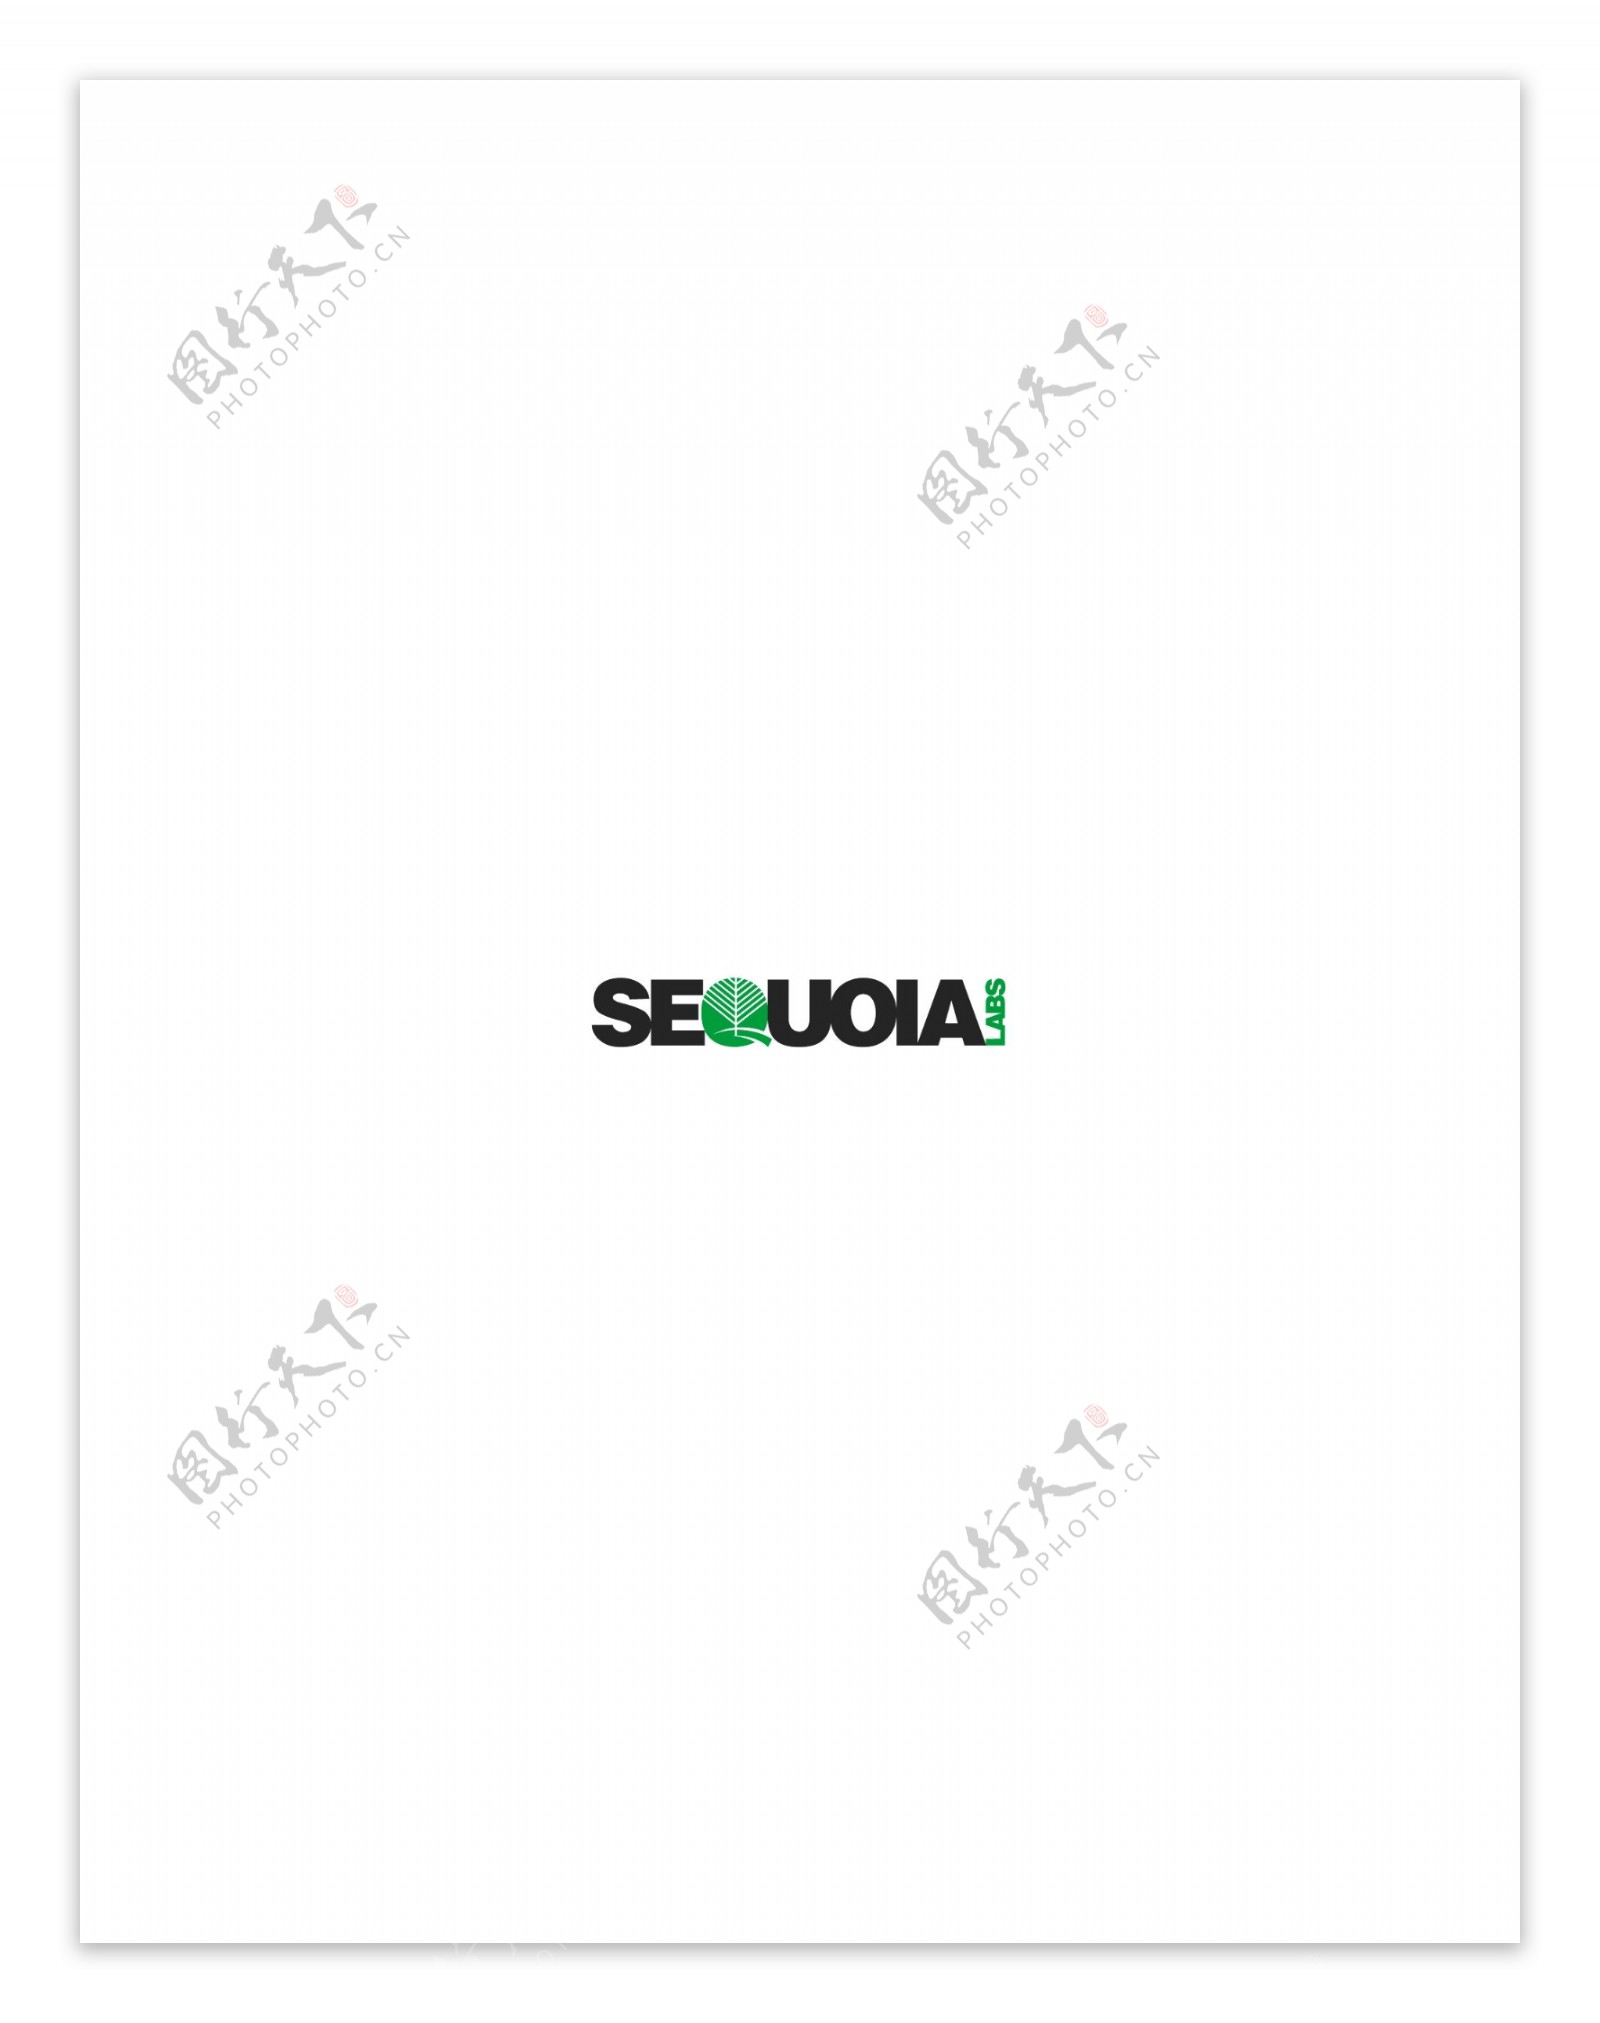 SequoiaLabslogo设计欣赏SequoiaLabs网络公司标志下载标志设计欣赏